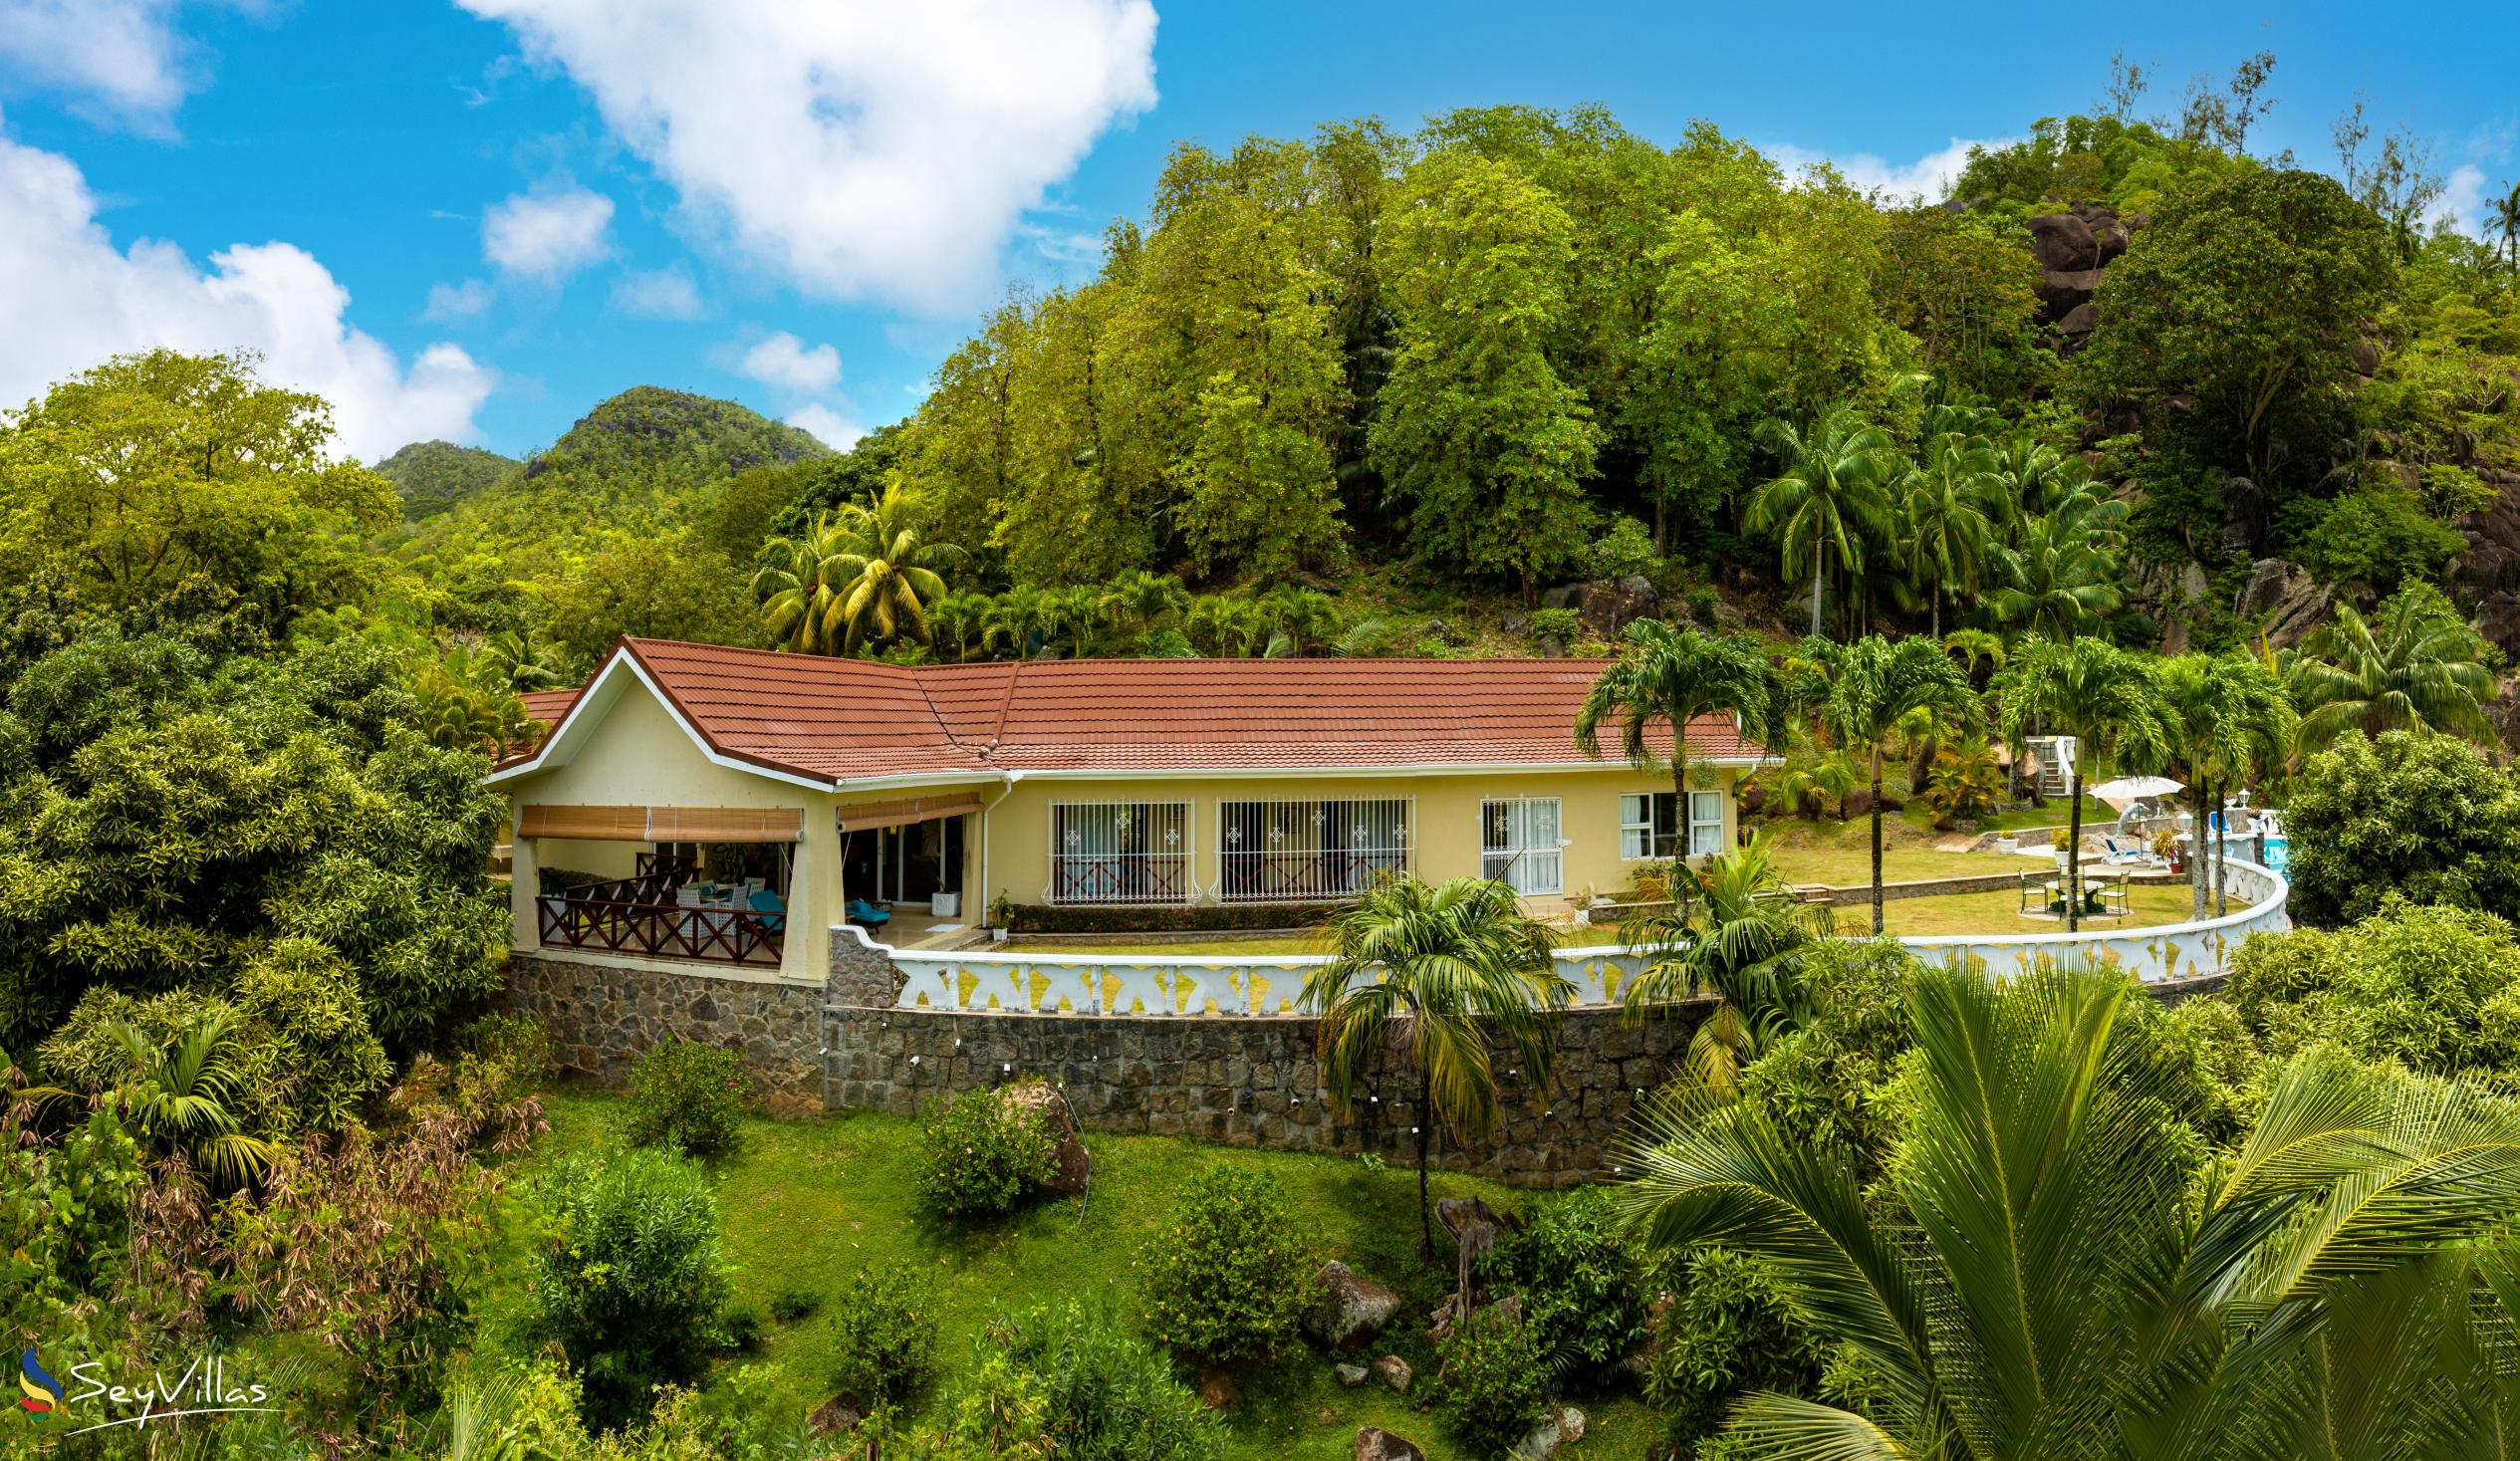 Foto 4: Villa Gazebo - Aussenbereich - Mahé (Seychellen)